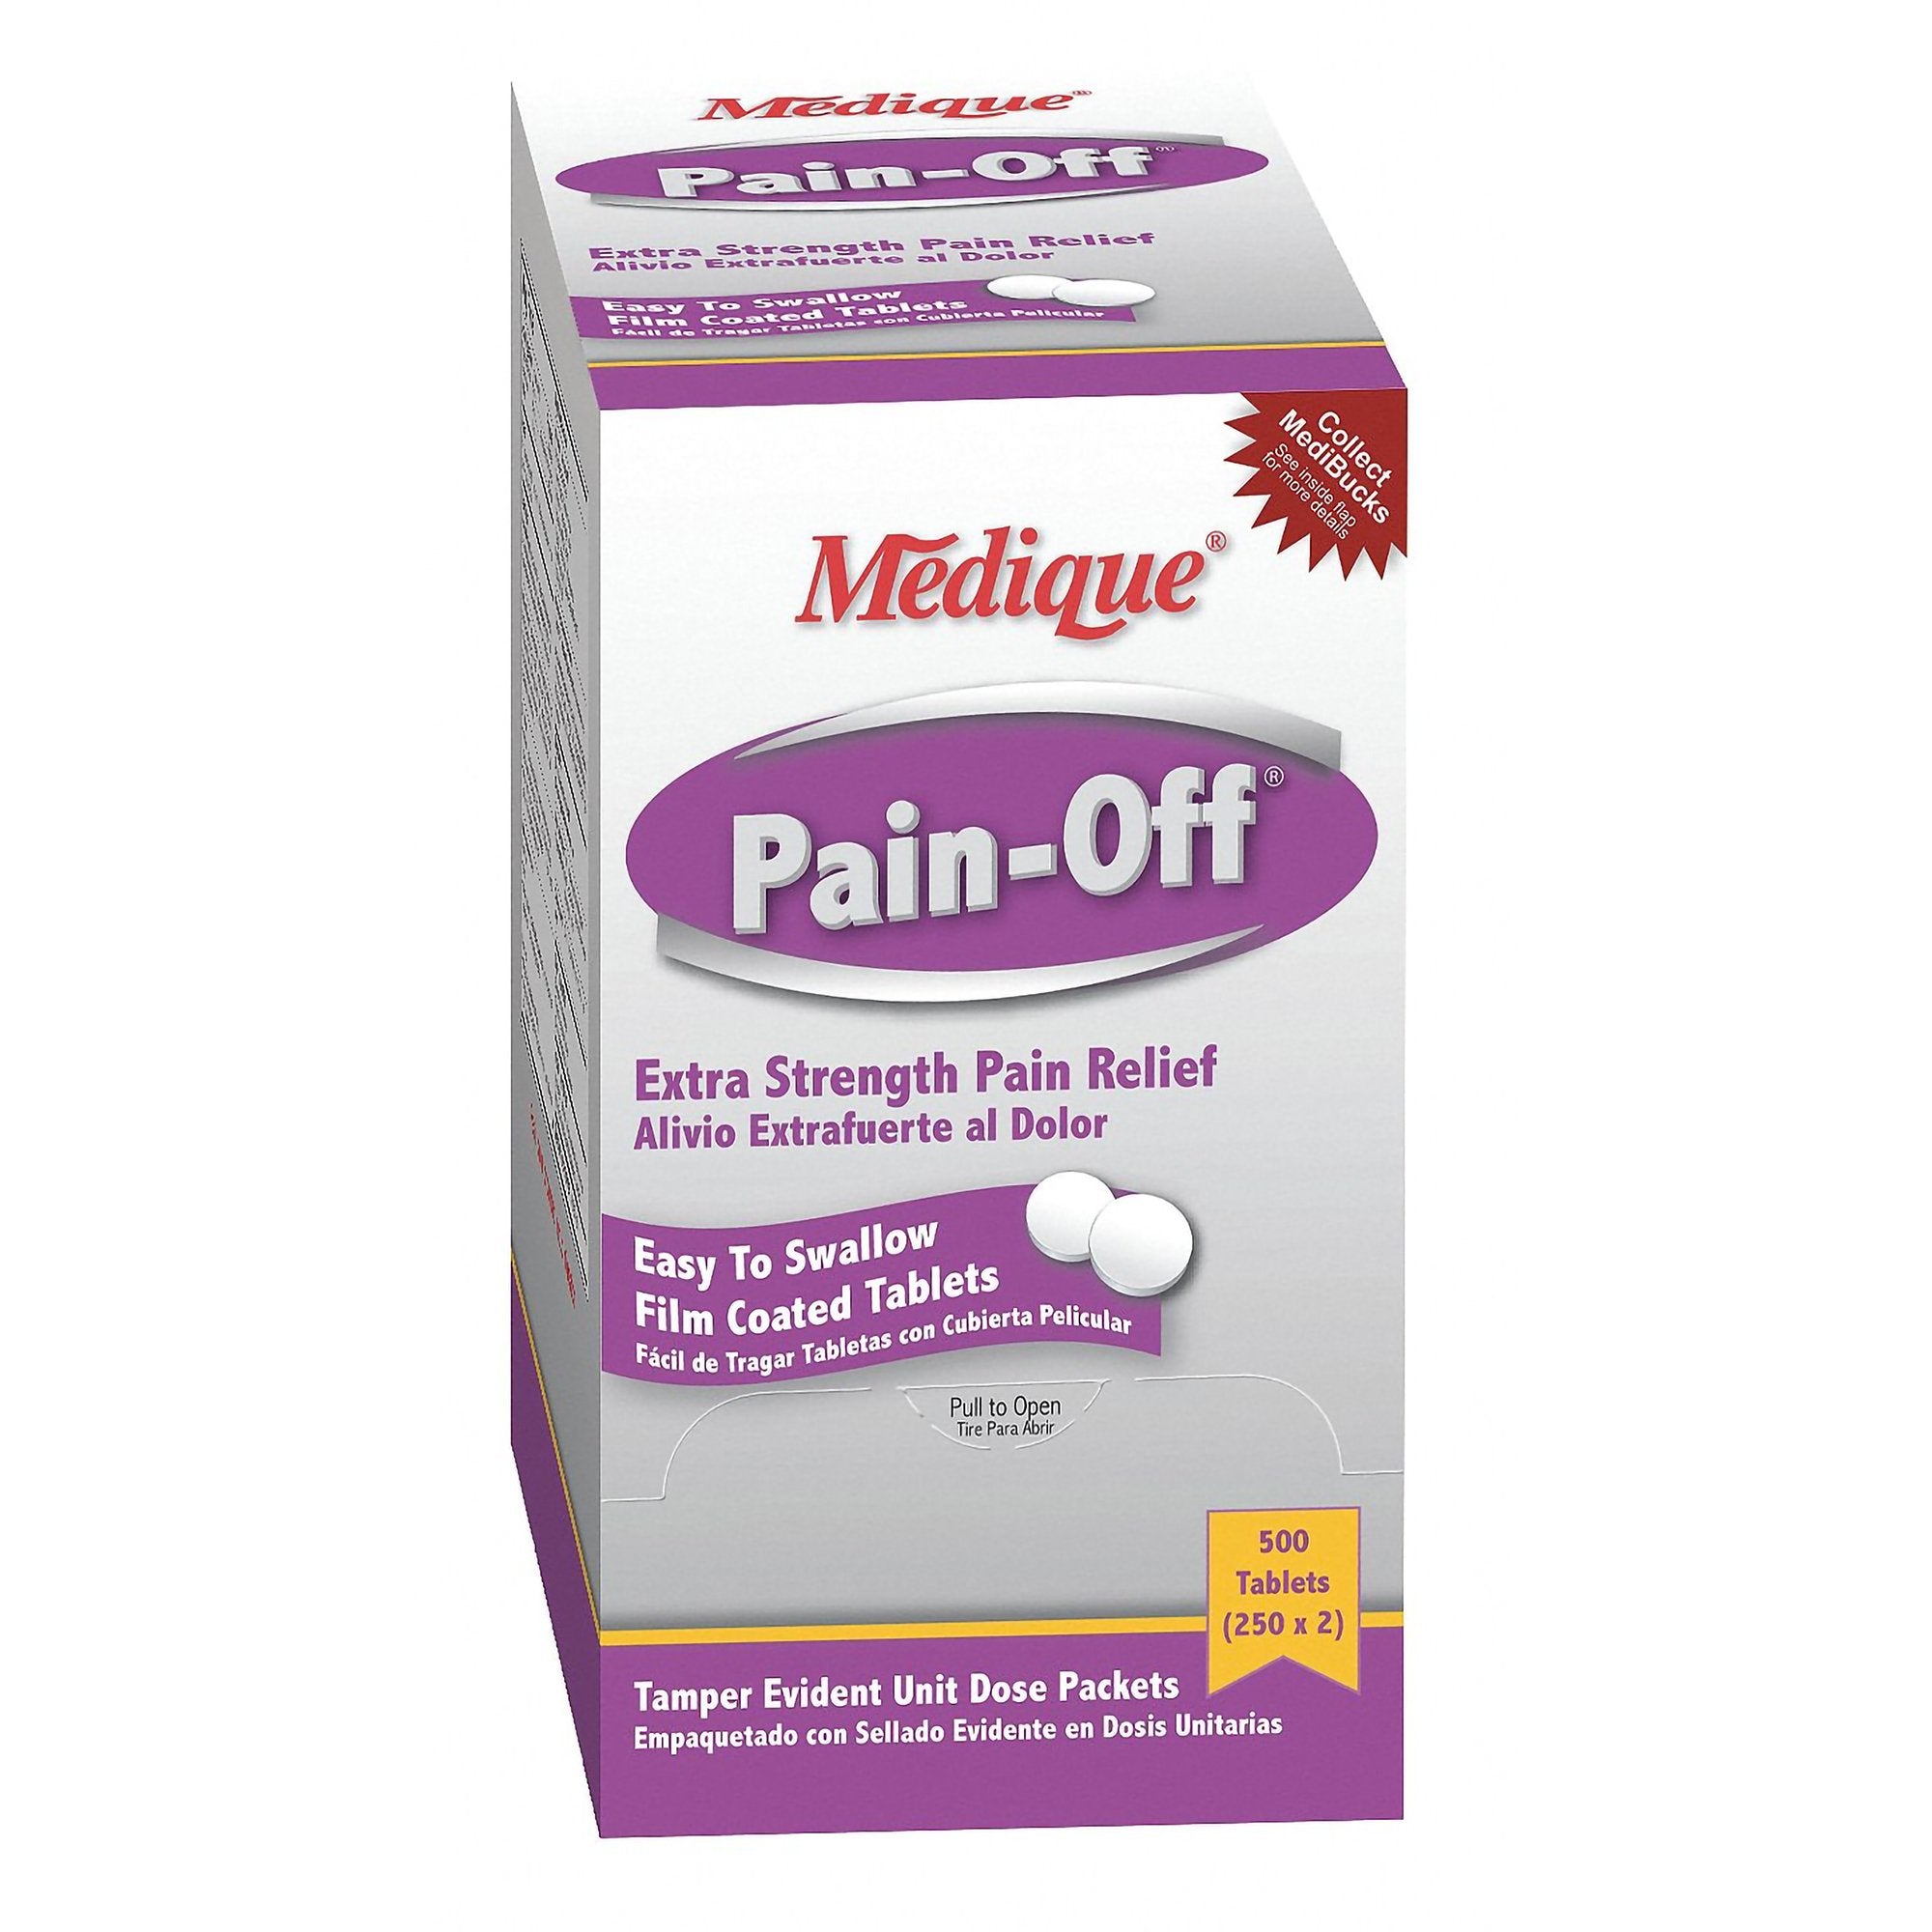 Pain-Off® Acetaminophen / Aspirin / Caffeine Pain Relief